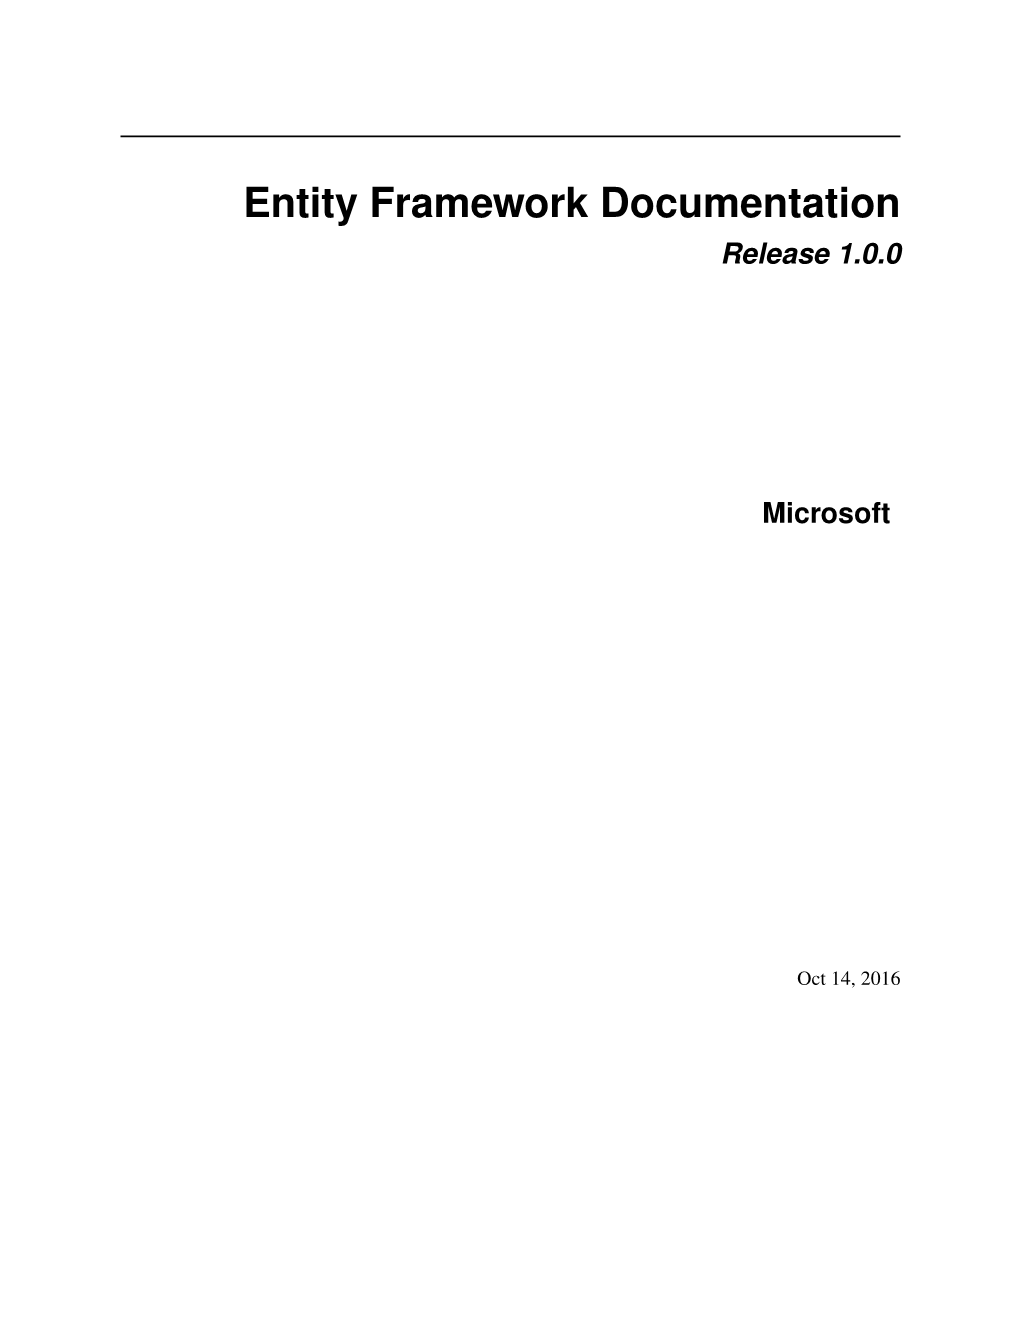 Entity Framework Documentation Release 1.0.0